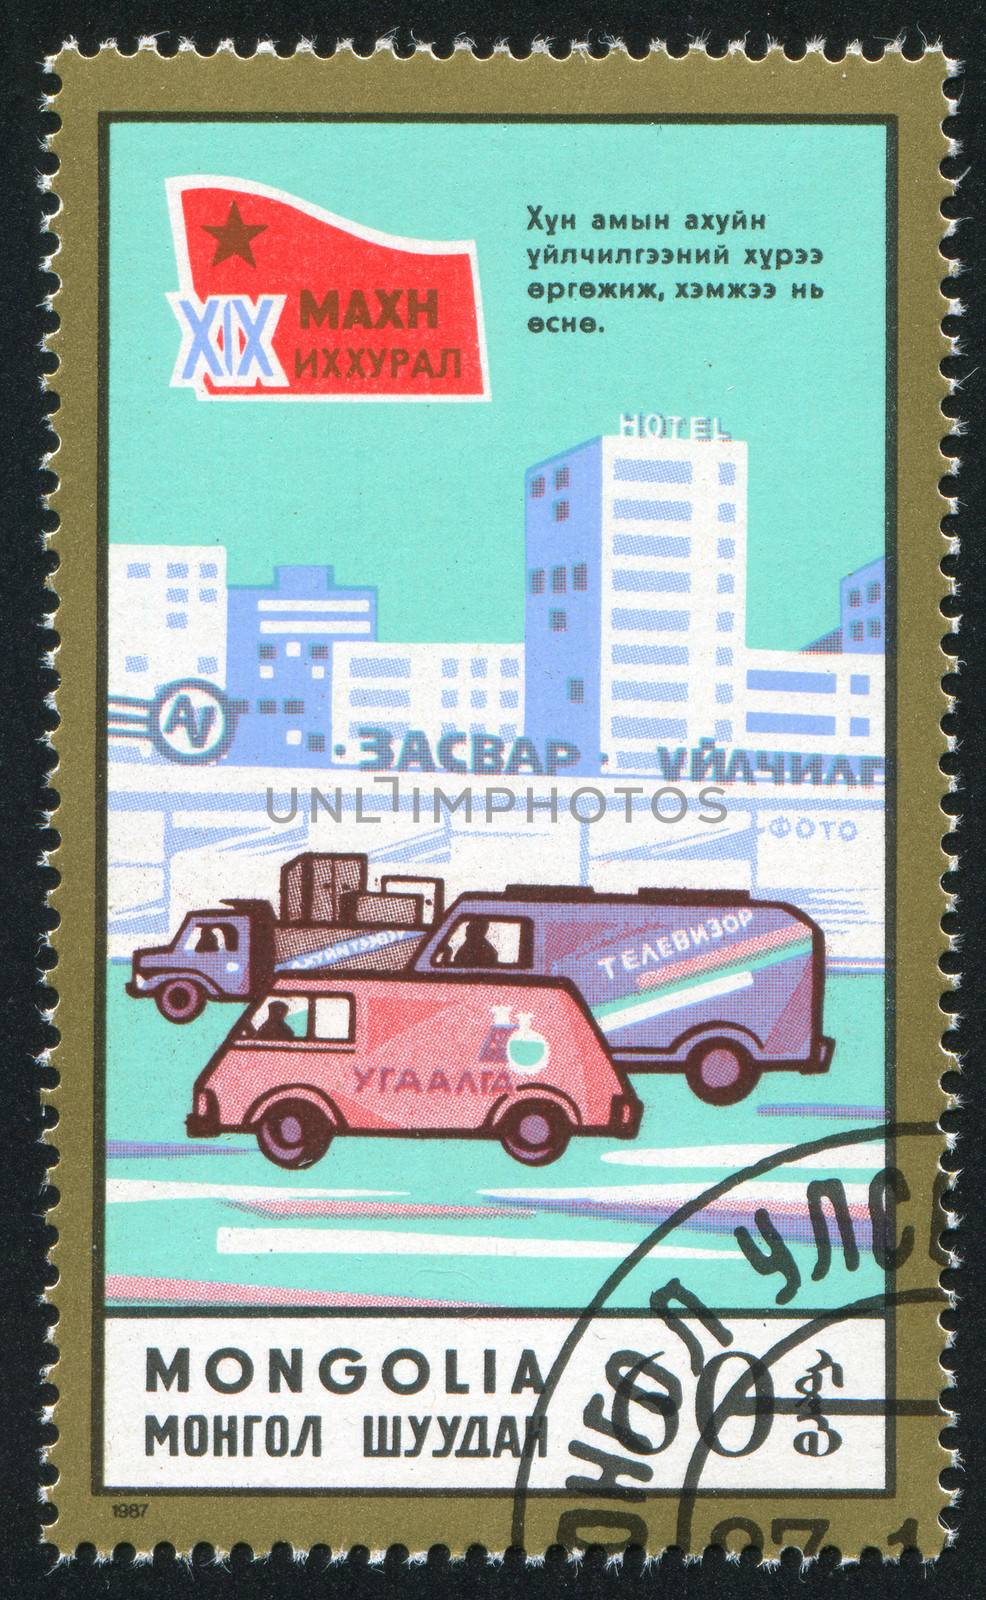 MONGOLIA - CIRCA 1987: stamp printed by Mongolia, shows transportation, circa 1987